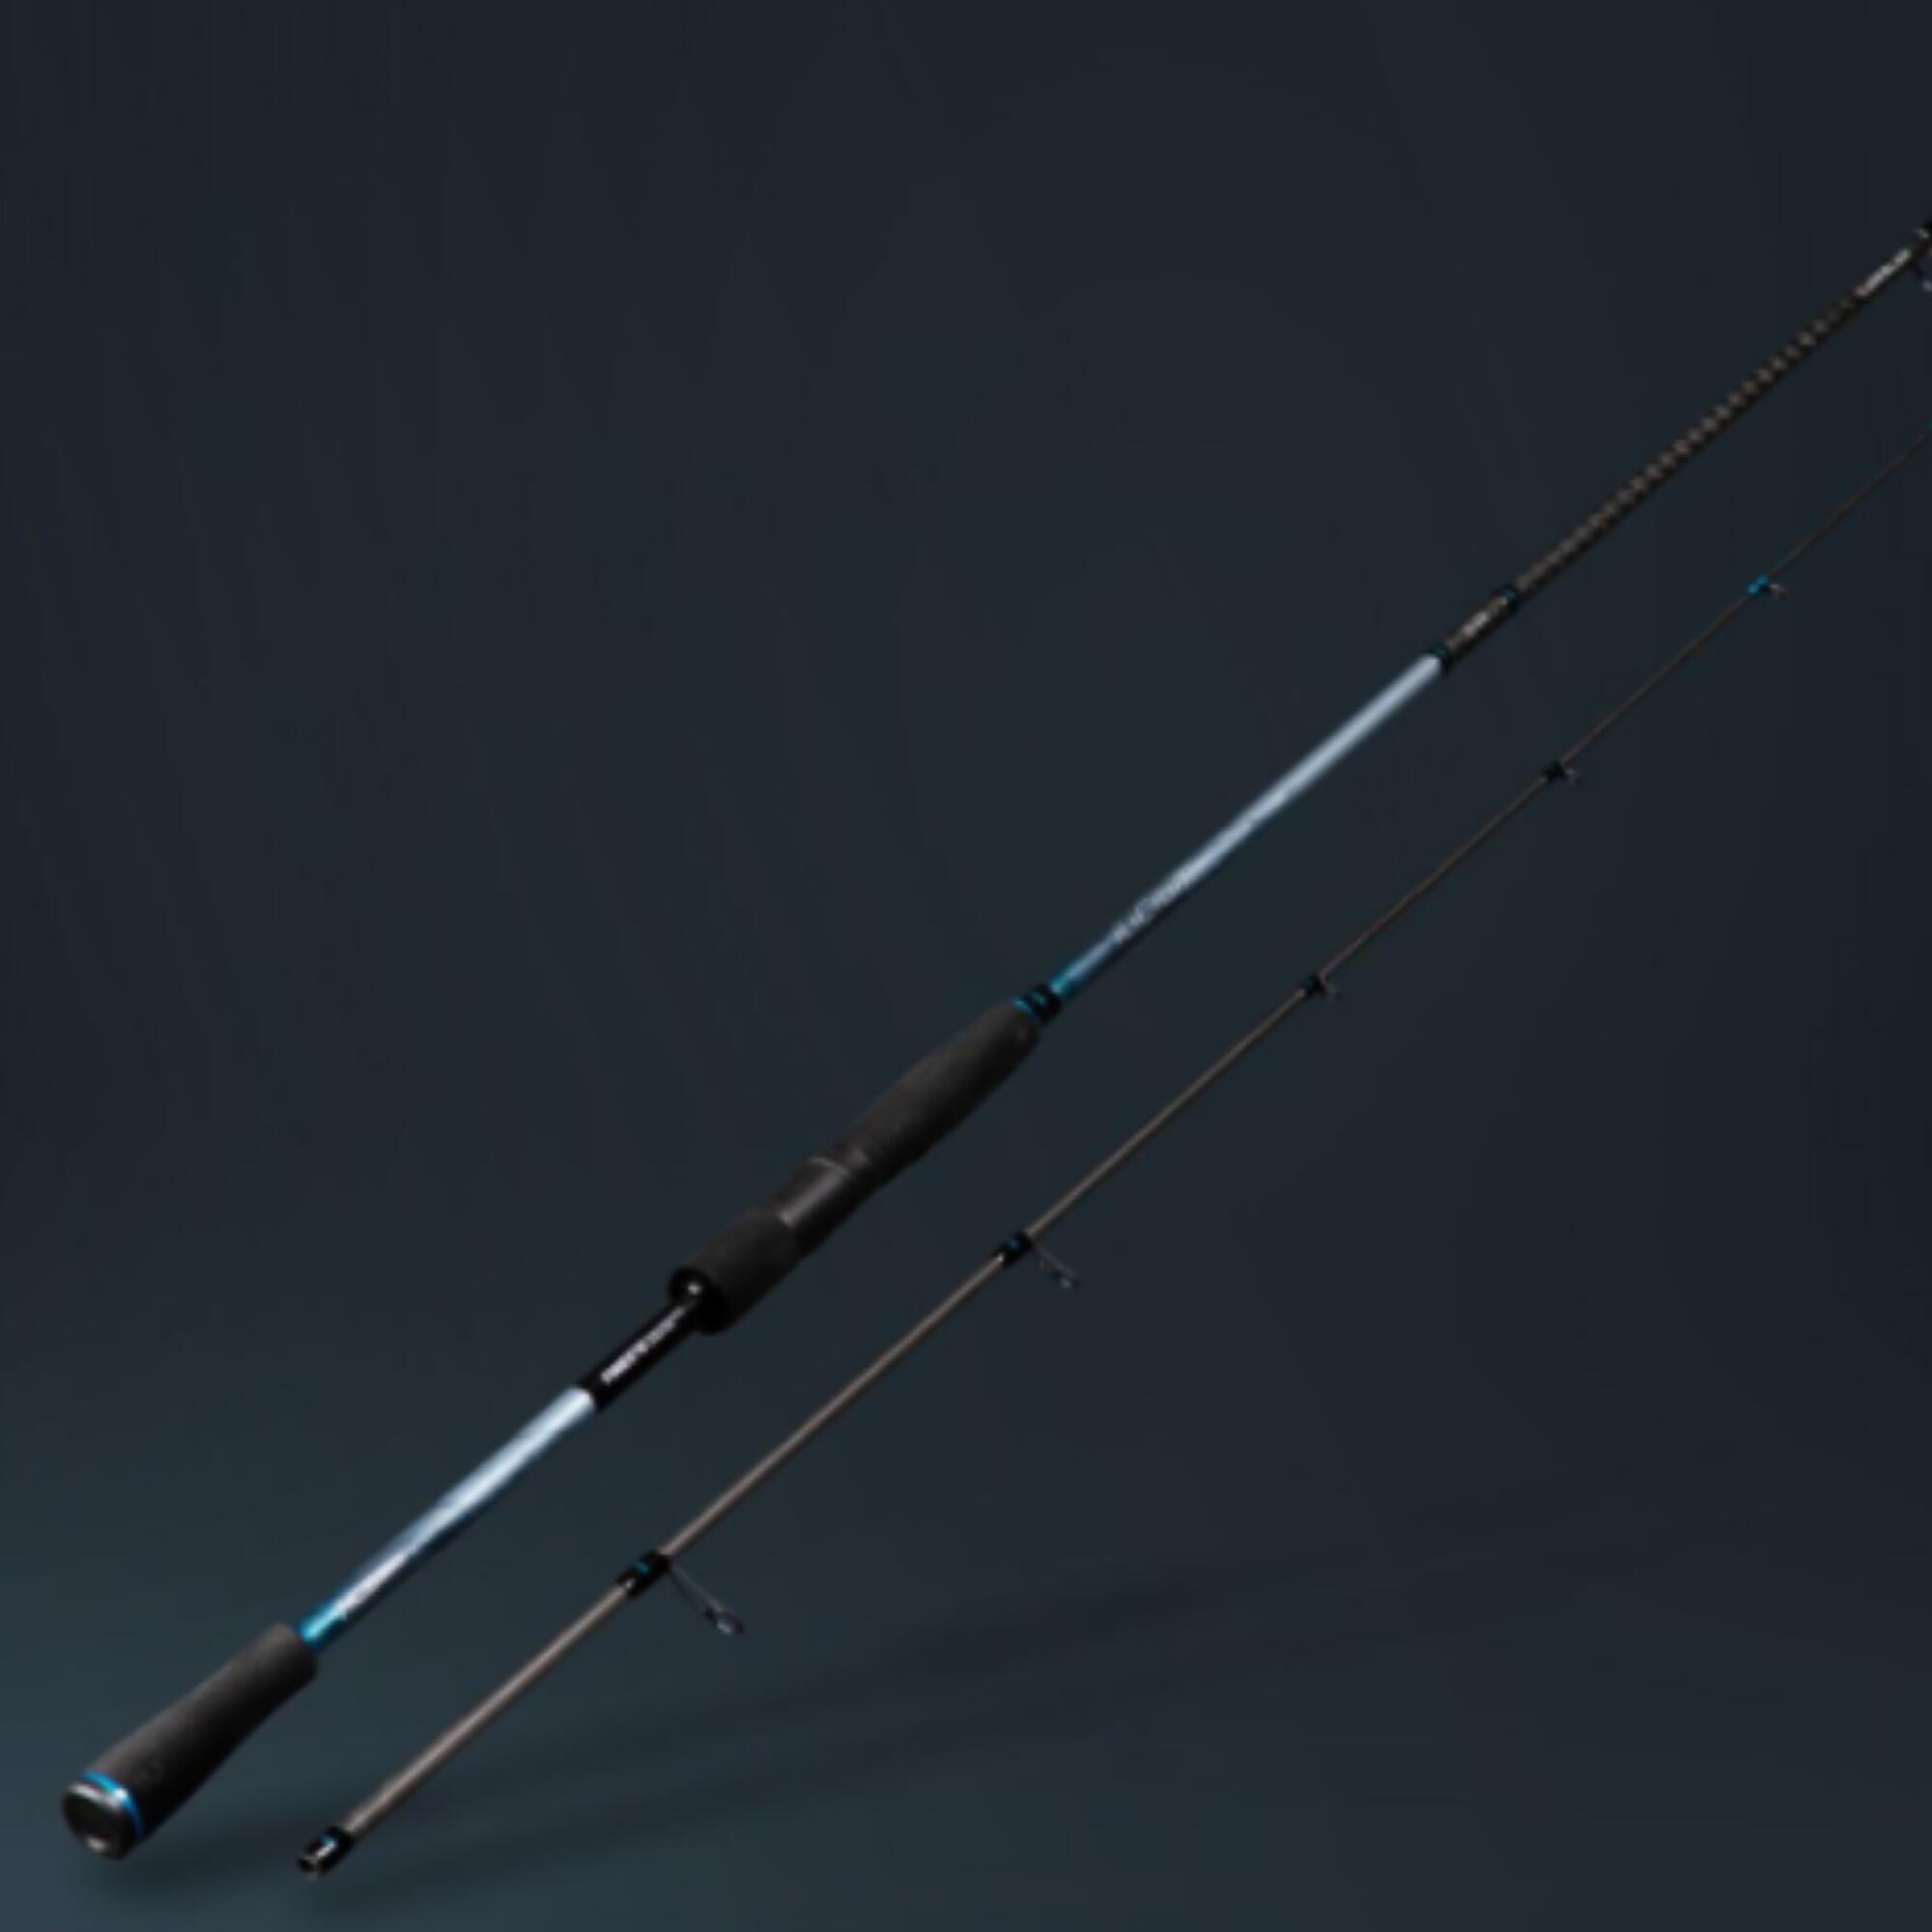 Sea Lure Fishing Rod ILICIUM-500 220 FINESSE 7-20 g 2/8